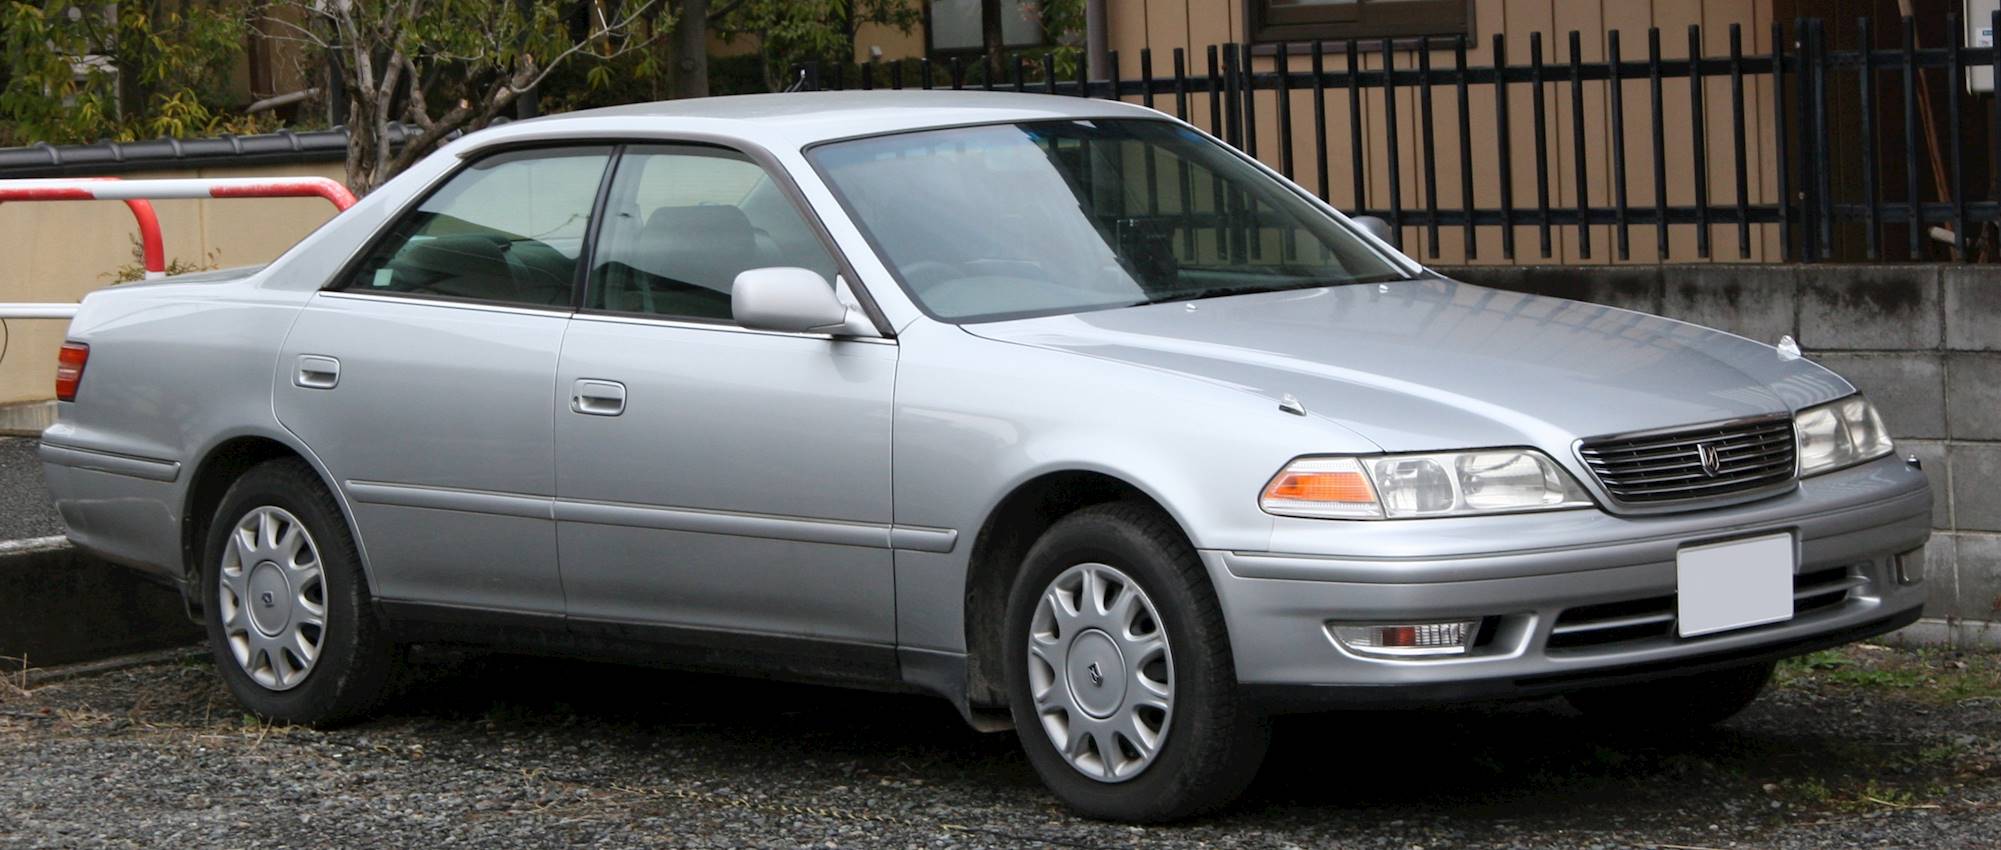 1997 Acura TL 4-Door Sedan 2.5L Base